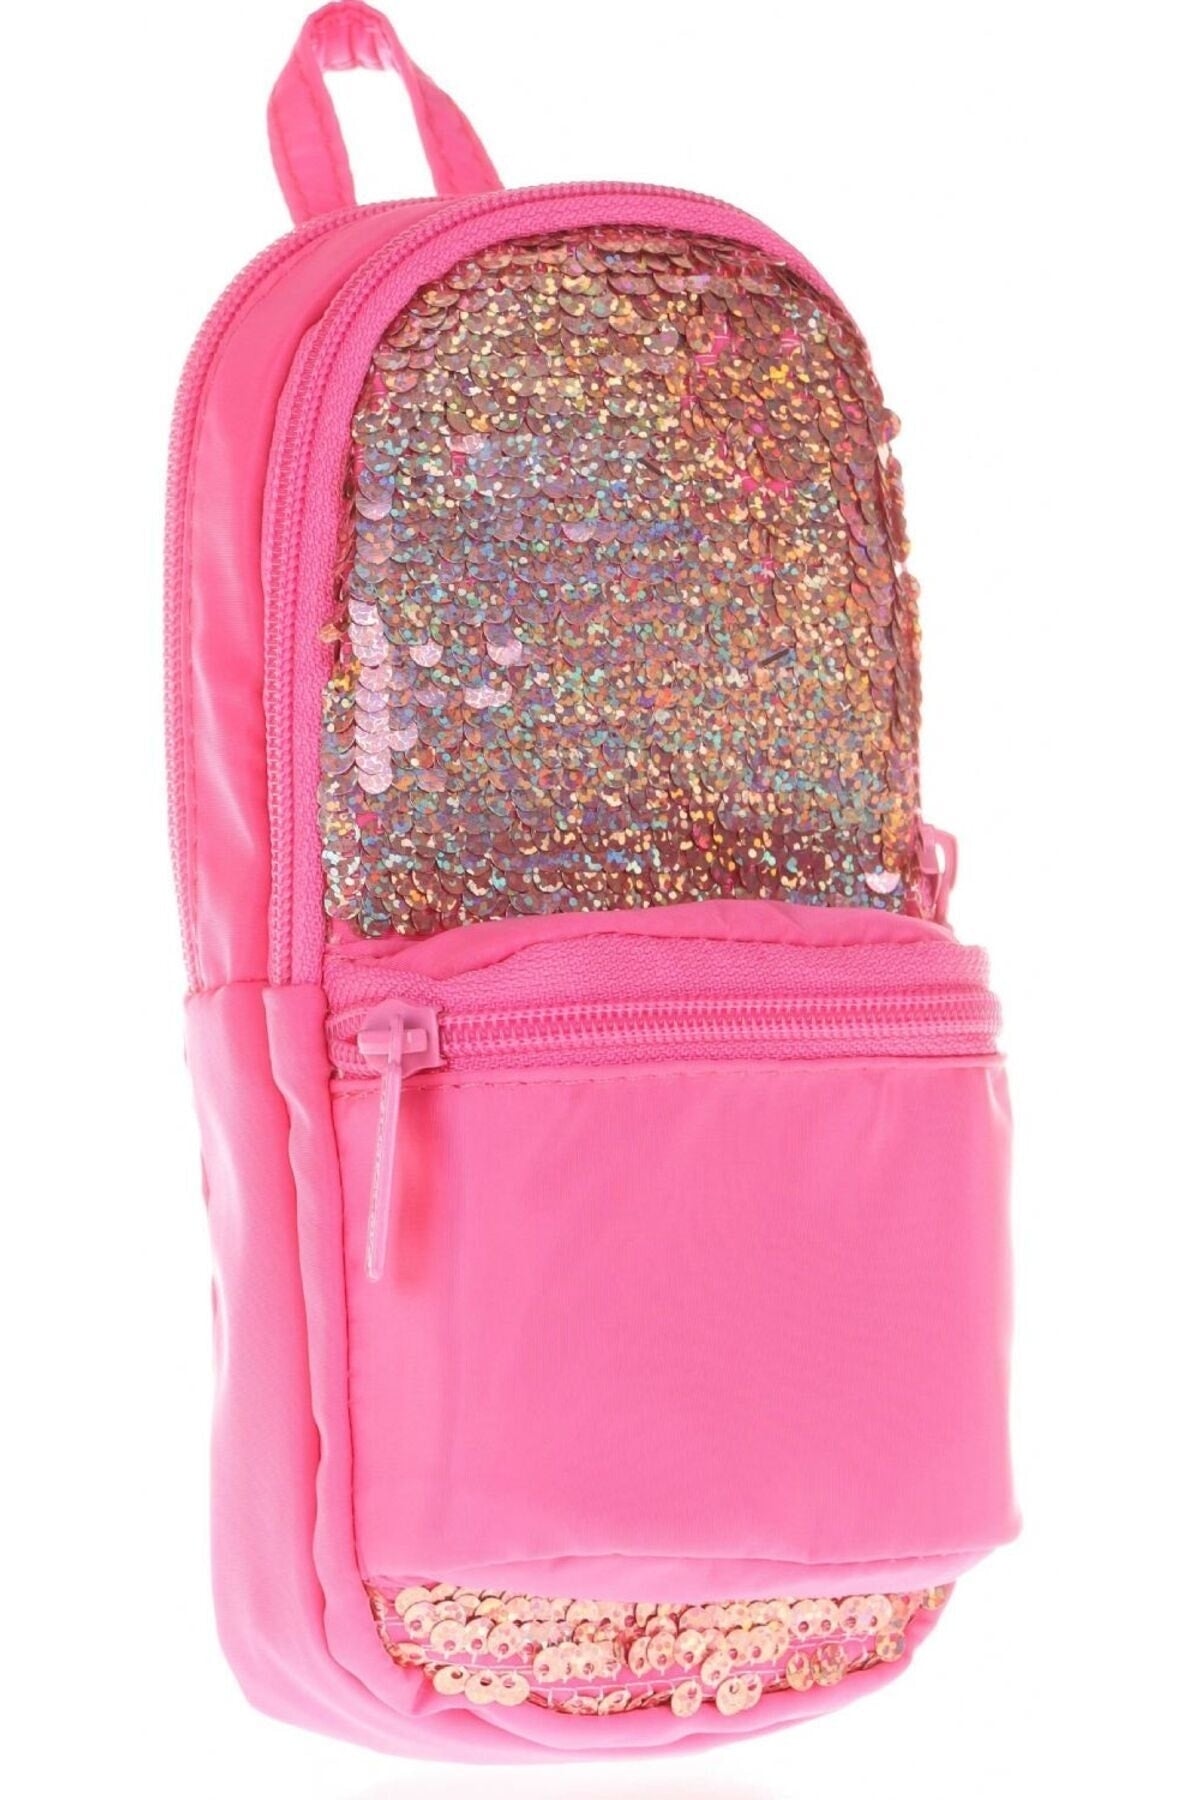 Pink Sequin School Bag and Pencil Holder Set - Girls